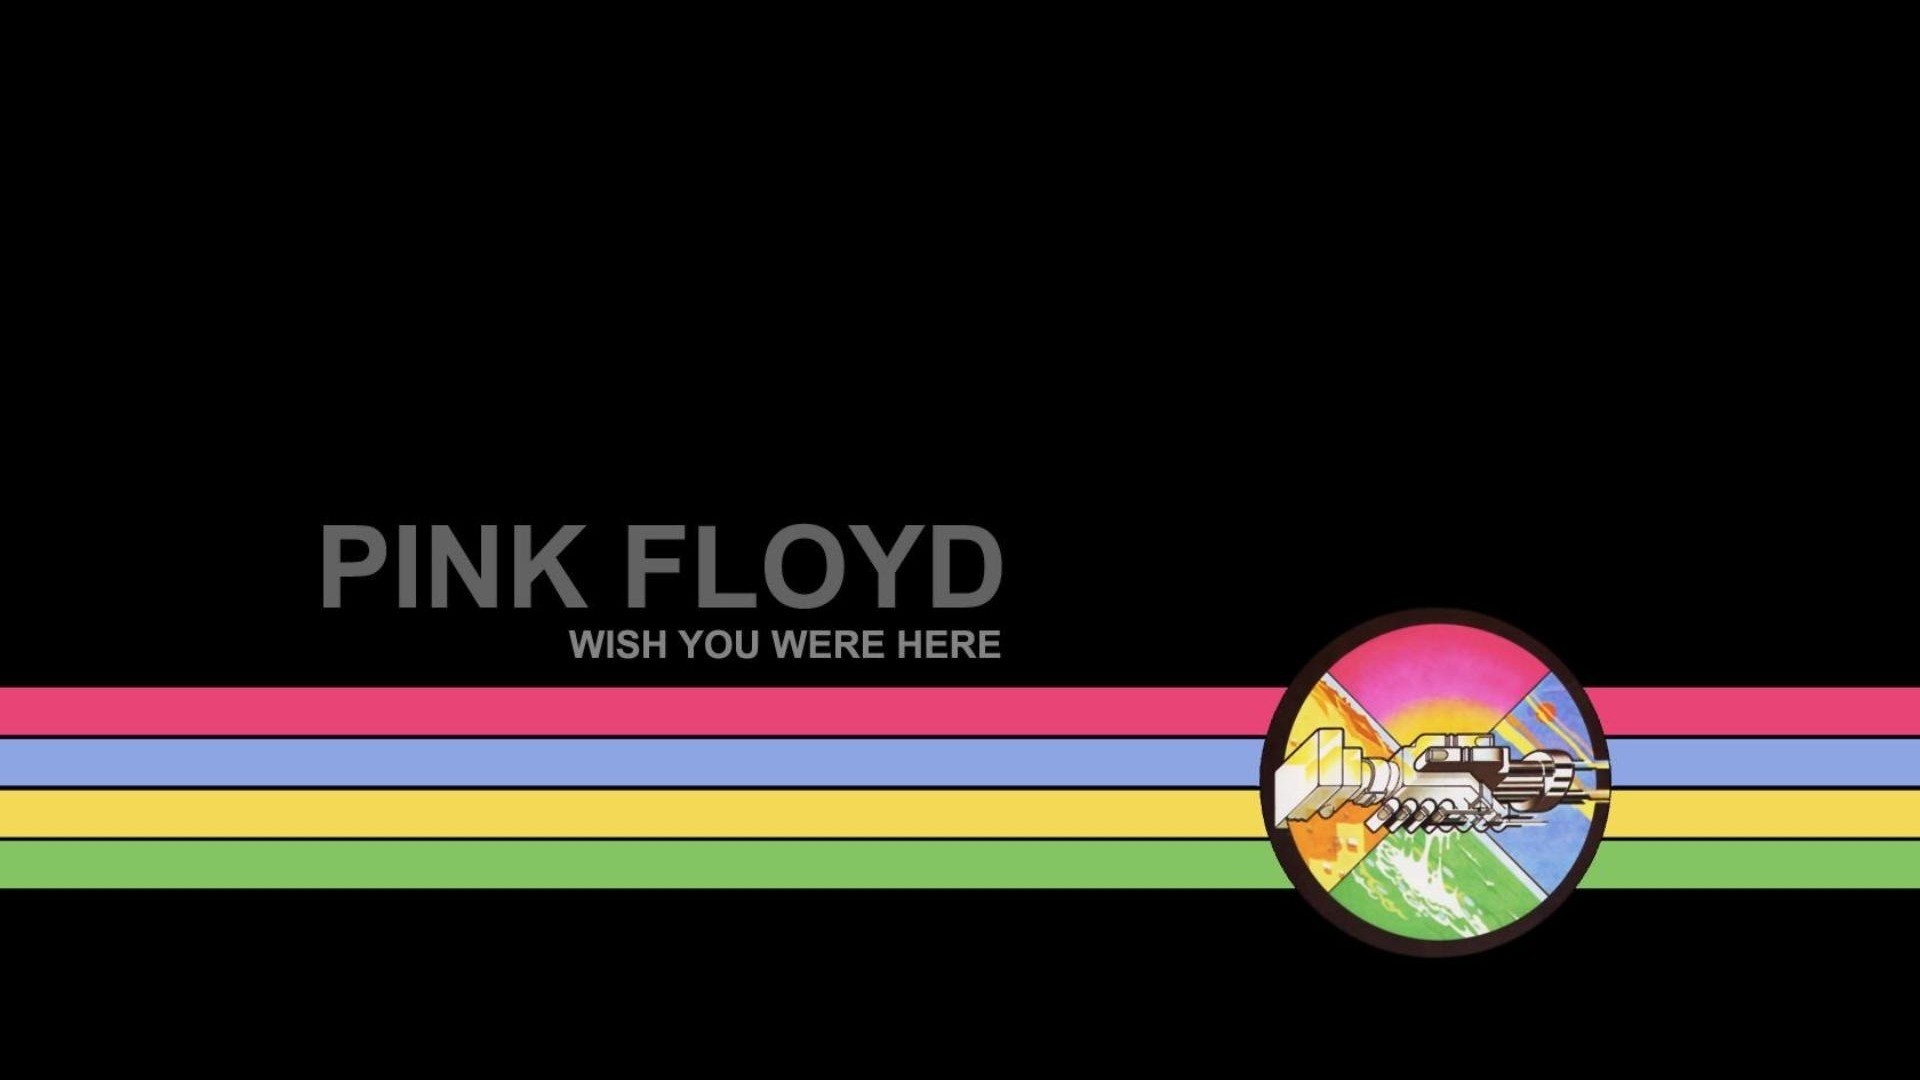 1920x1080 Pink Floyd Wish You Were Here Desktop Full HD Wallpaper ...